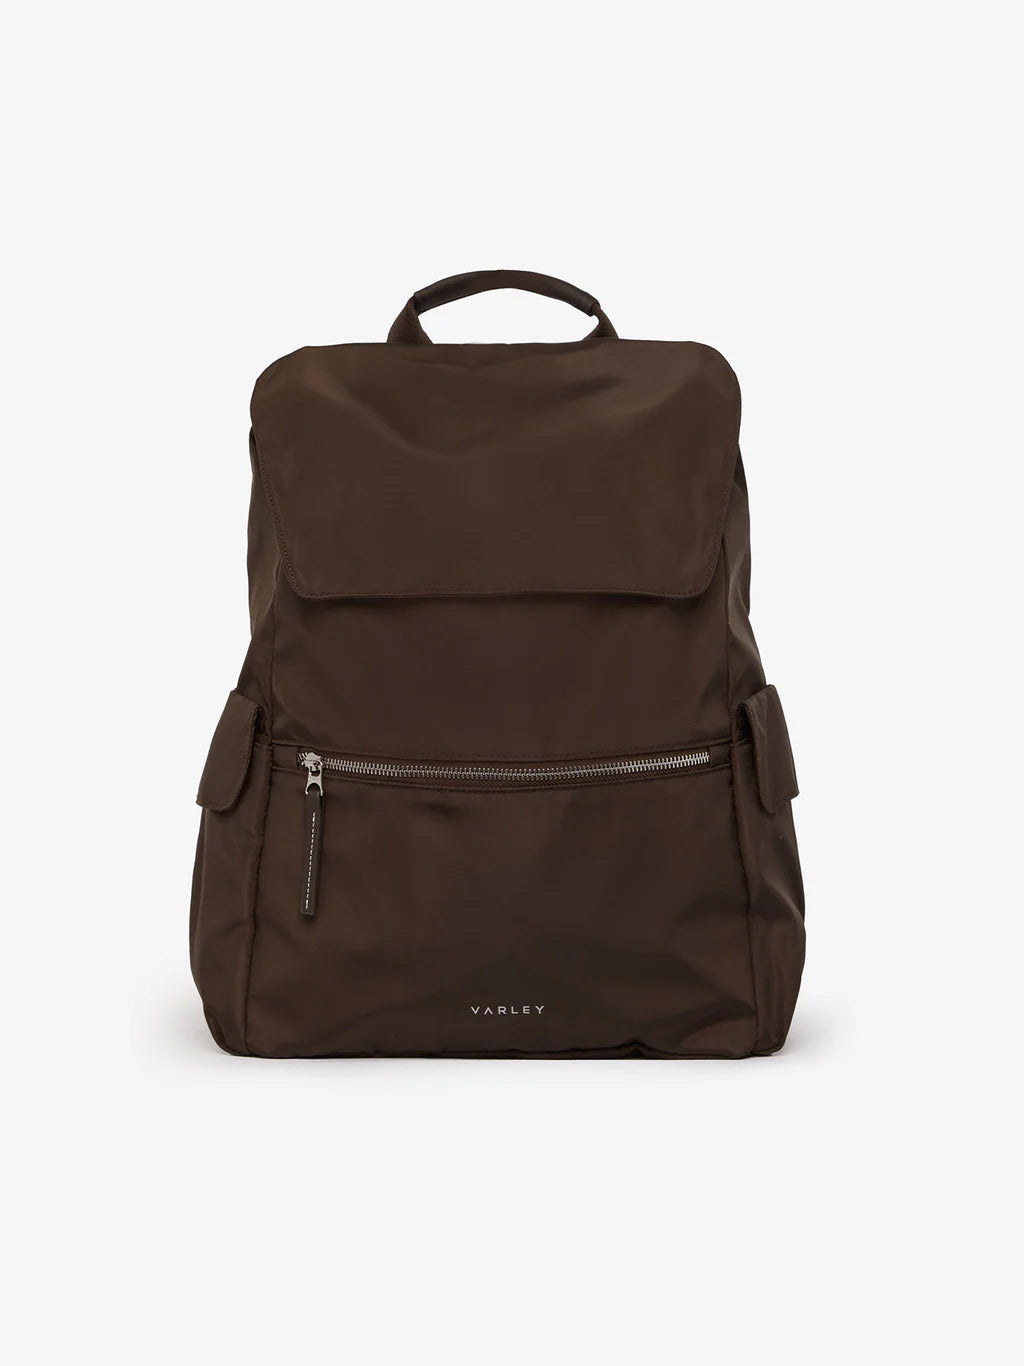 Corton Coffee Bean Backpack